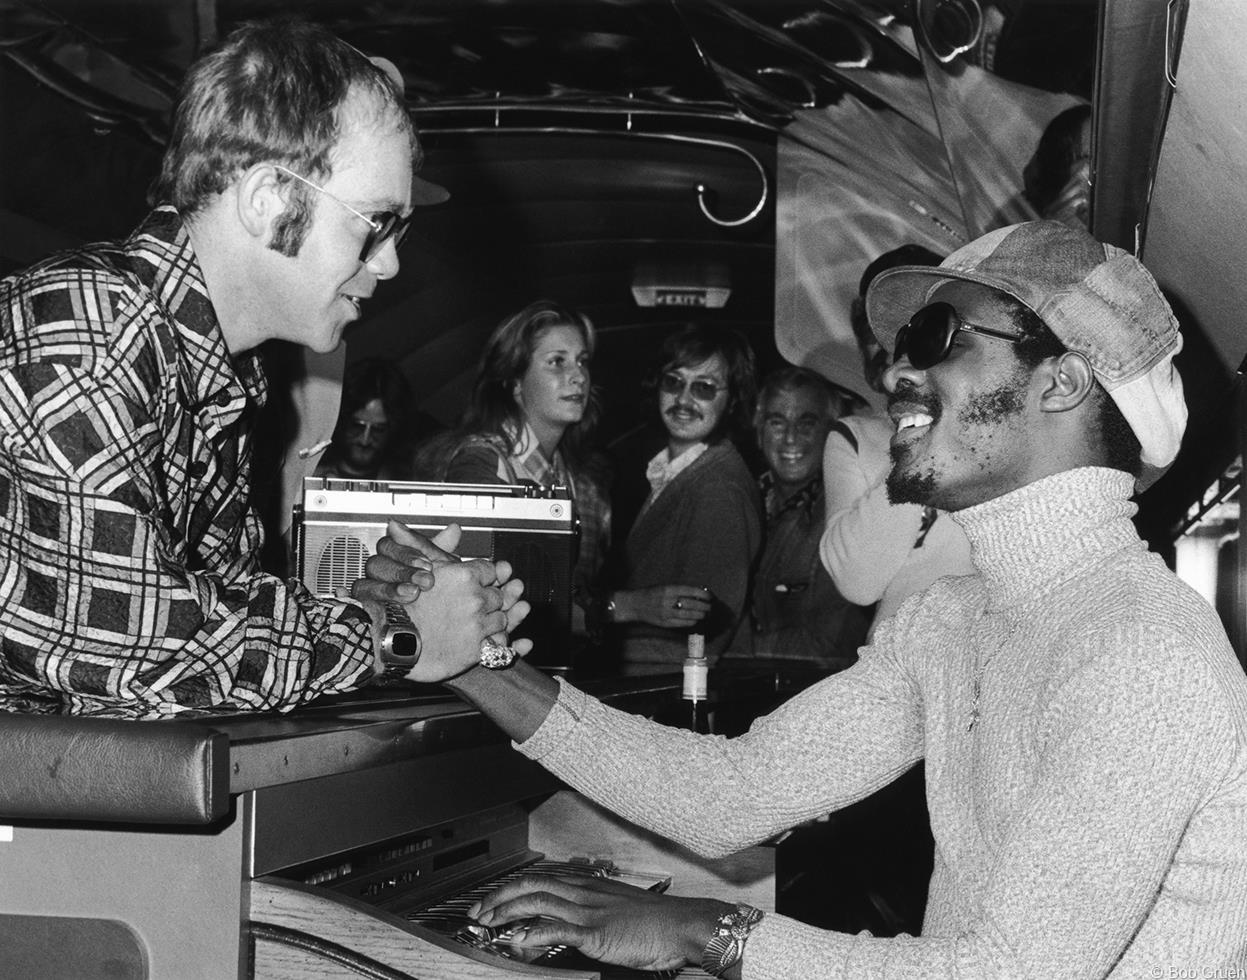 Bob Gruen Portrait Photograph - Elton John & Stevie Wonder, Starship Airplane 1973